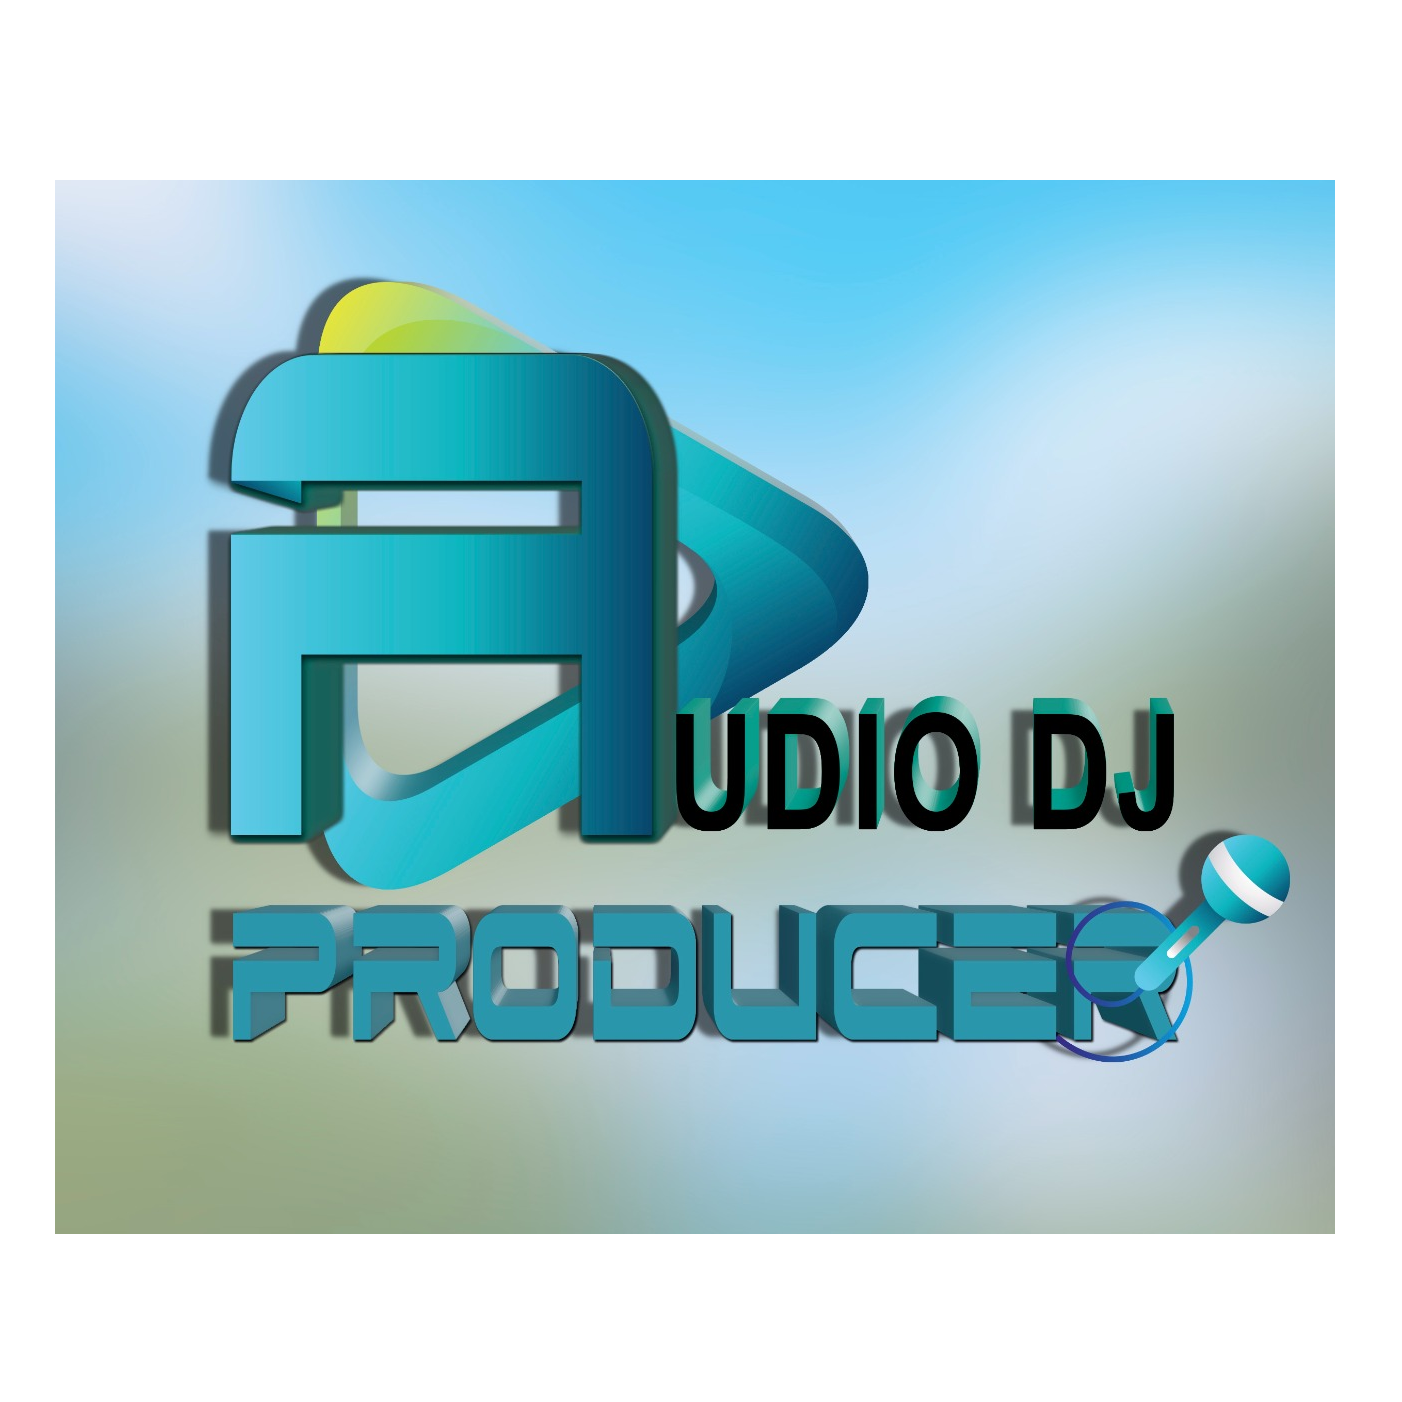 AUDIO DJ PRODUCER